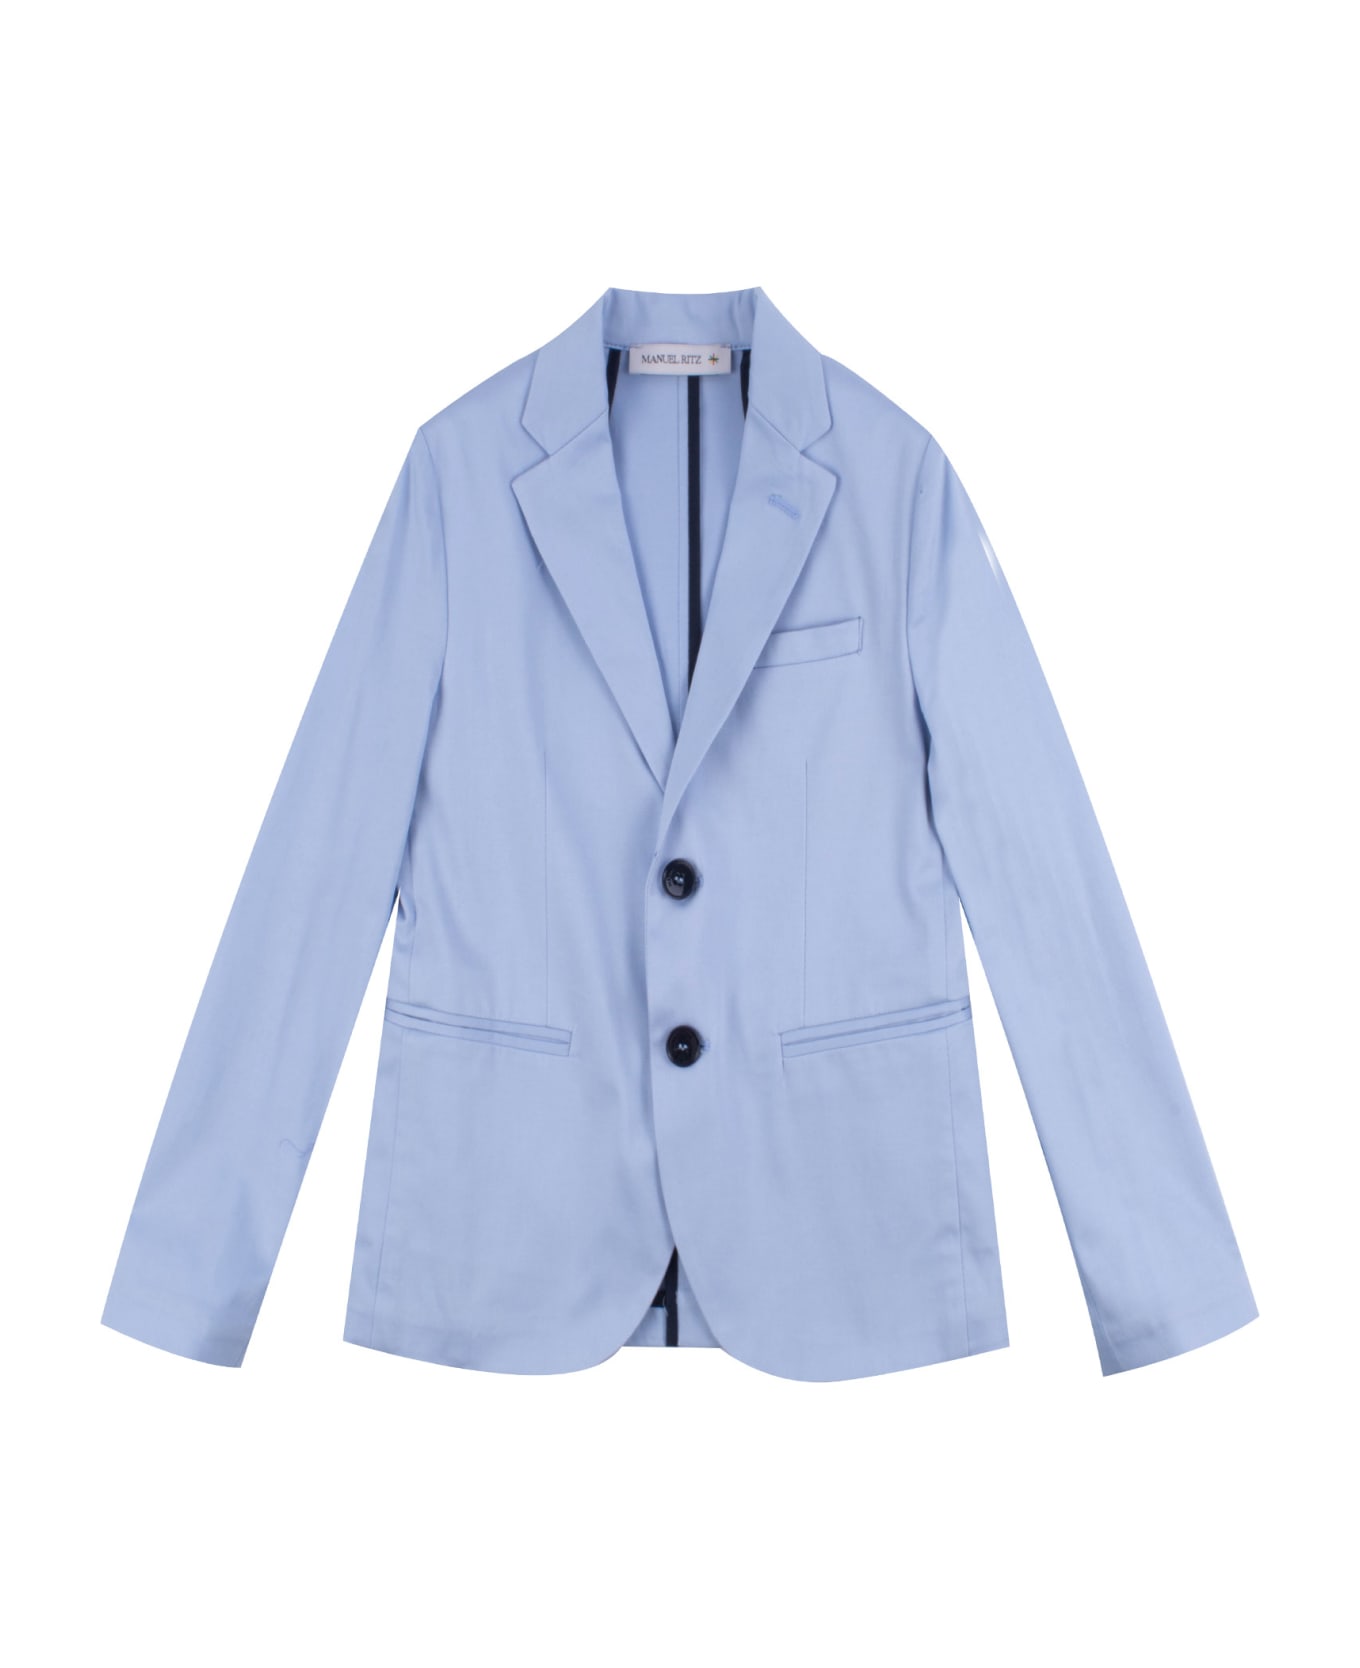 Manuel Ritz Cotton Jacket - Light blue